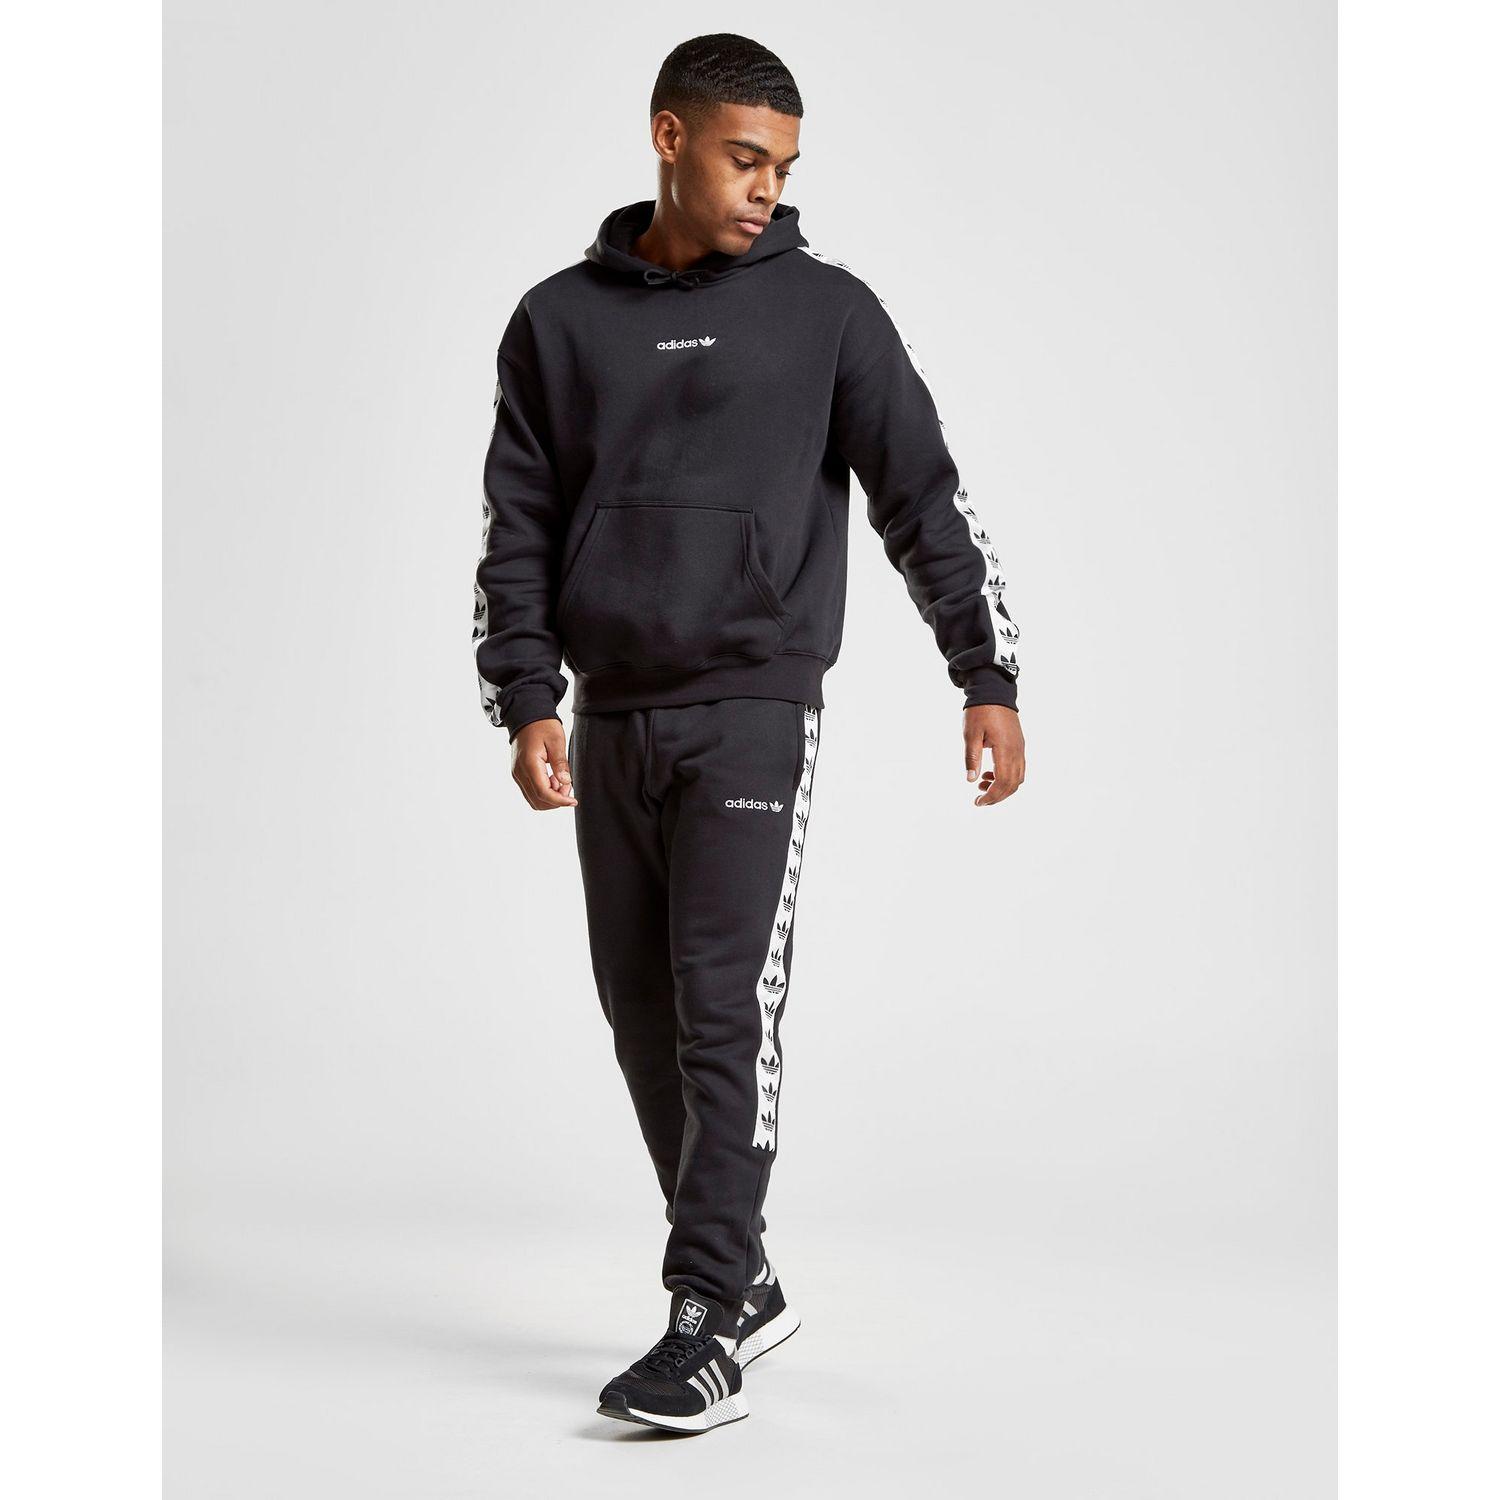 adidas Originals Tape Fleece Track Pants in Black/White (Black) for Men -  Lyst